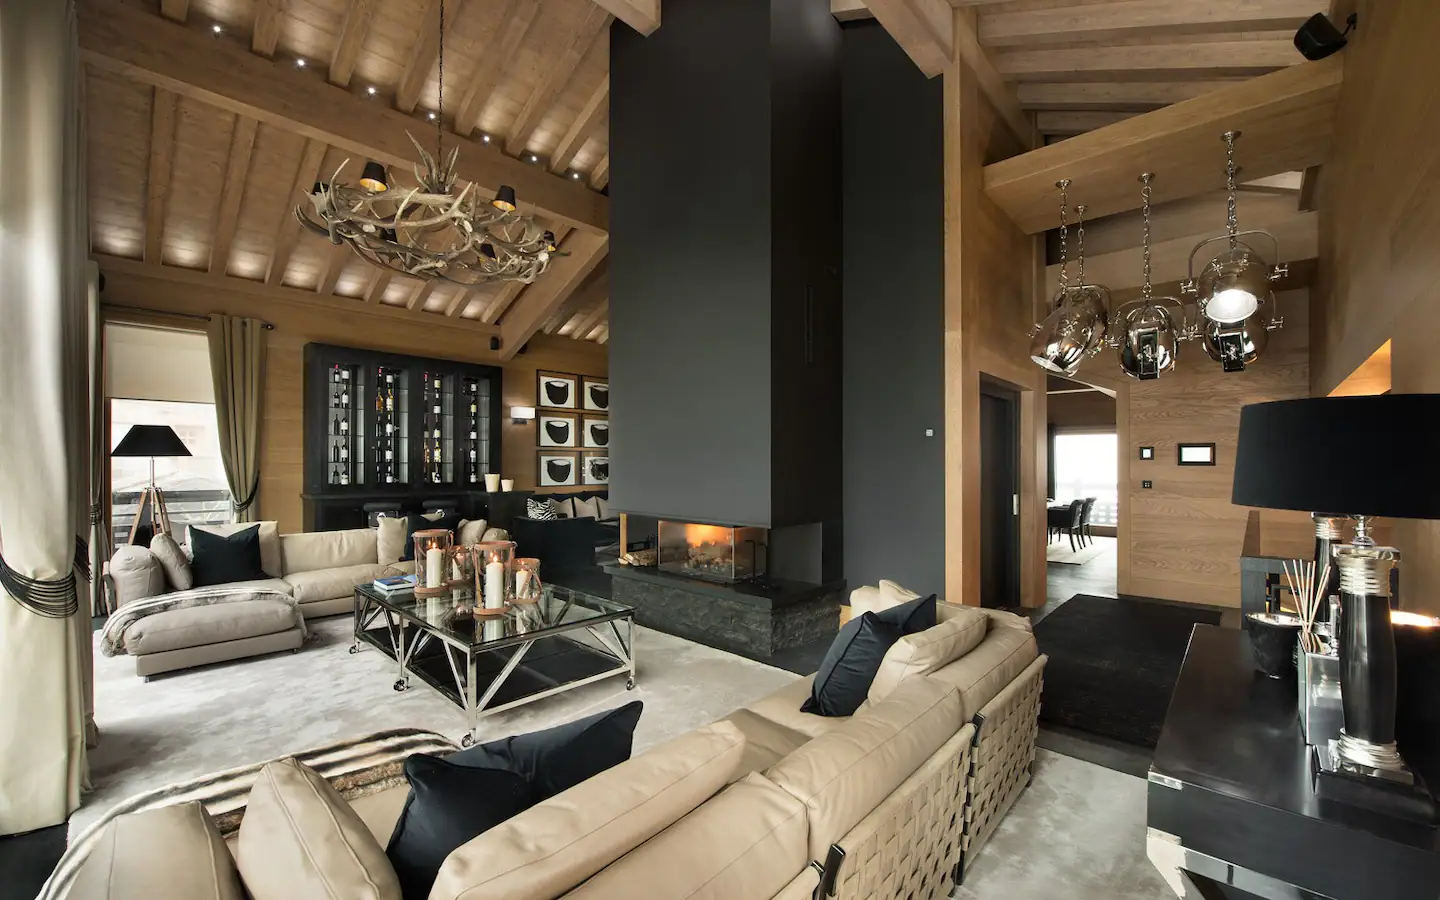 Sleek and stylish living room, the epitome of modern comfort.